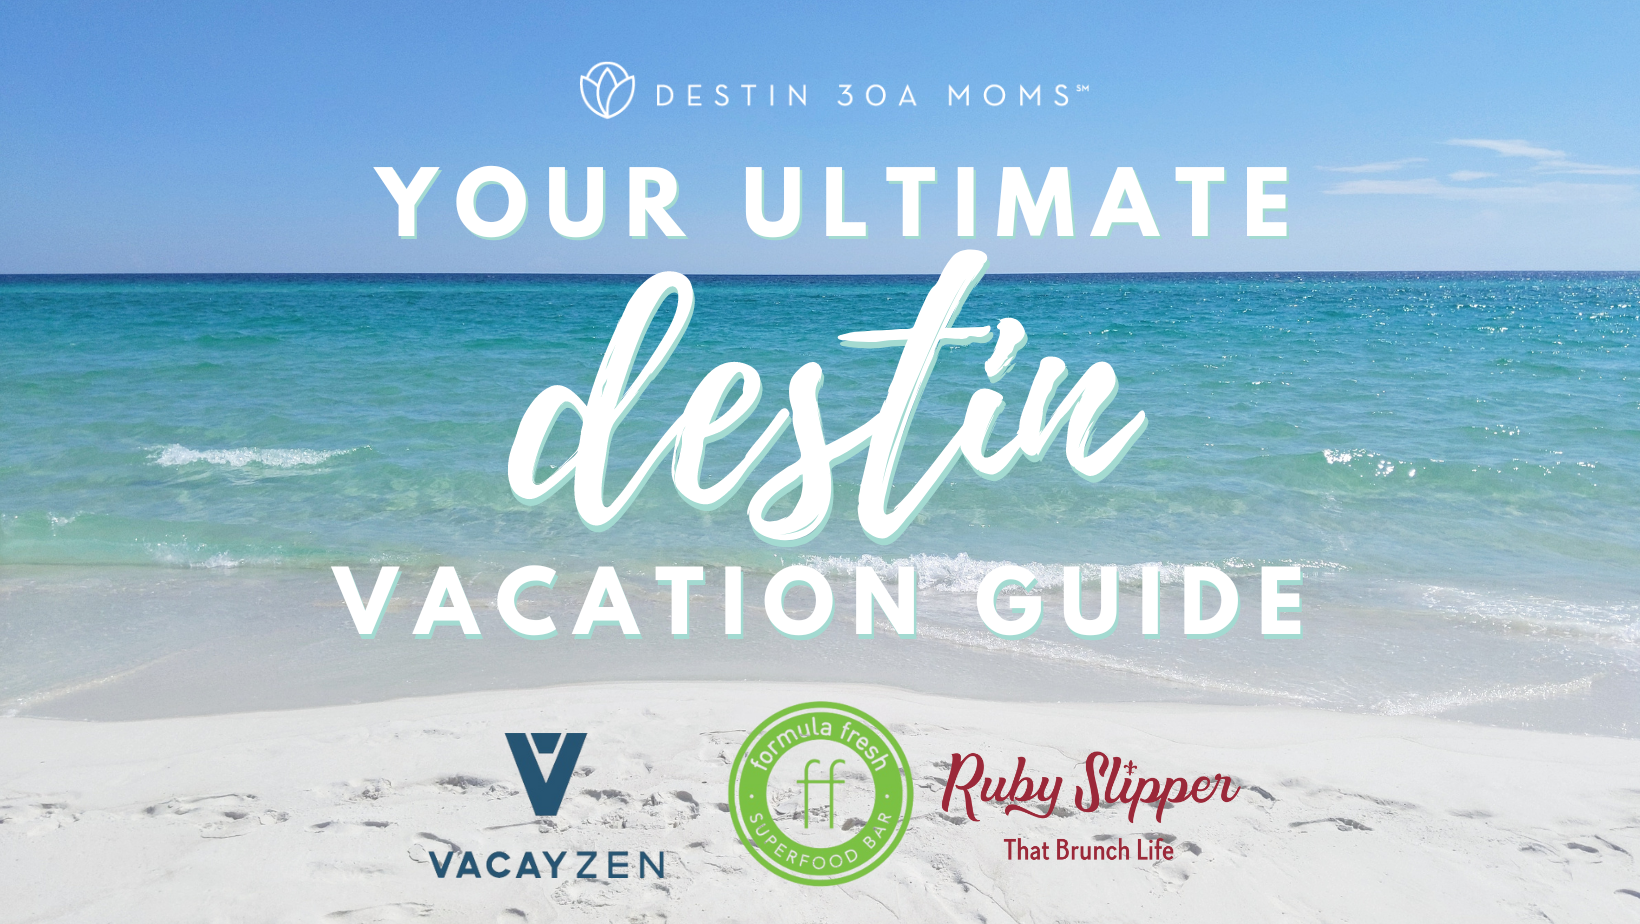 destin vacation guide